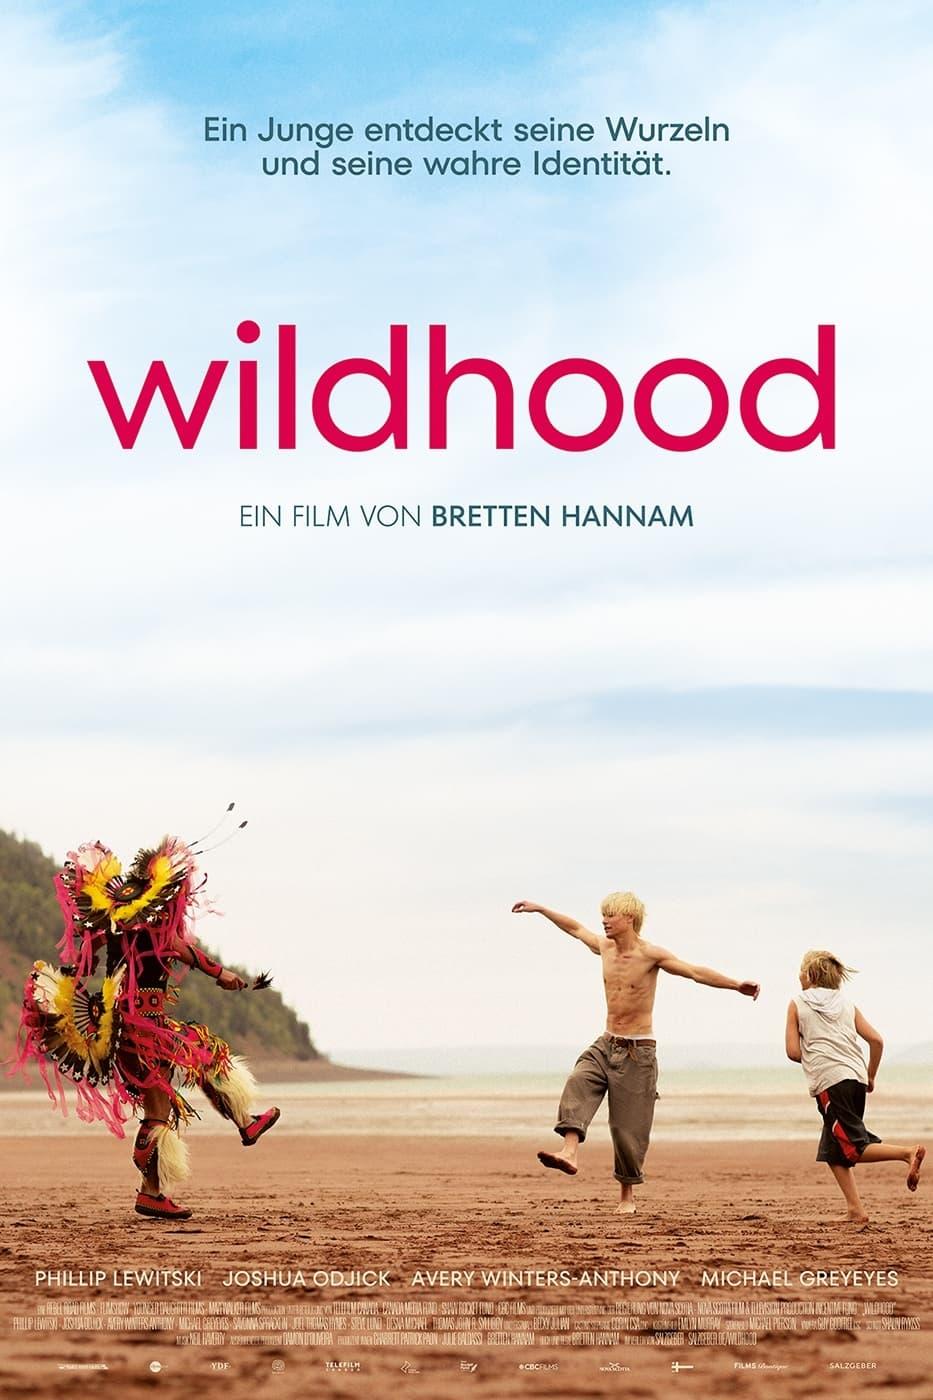 Wildhood poster